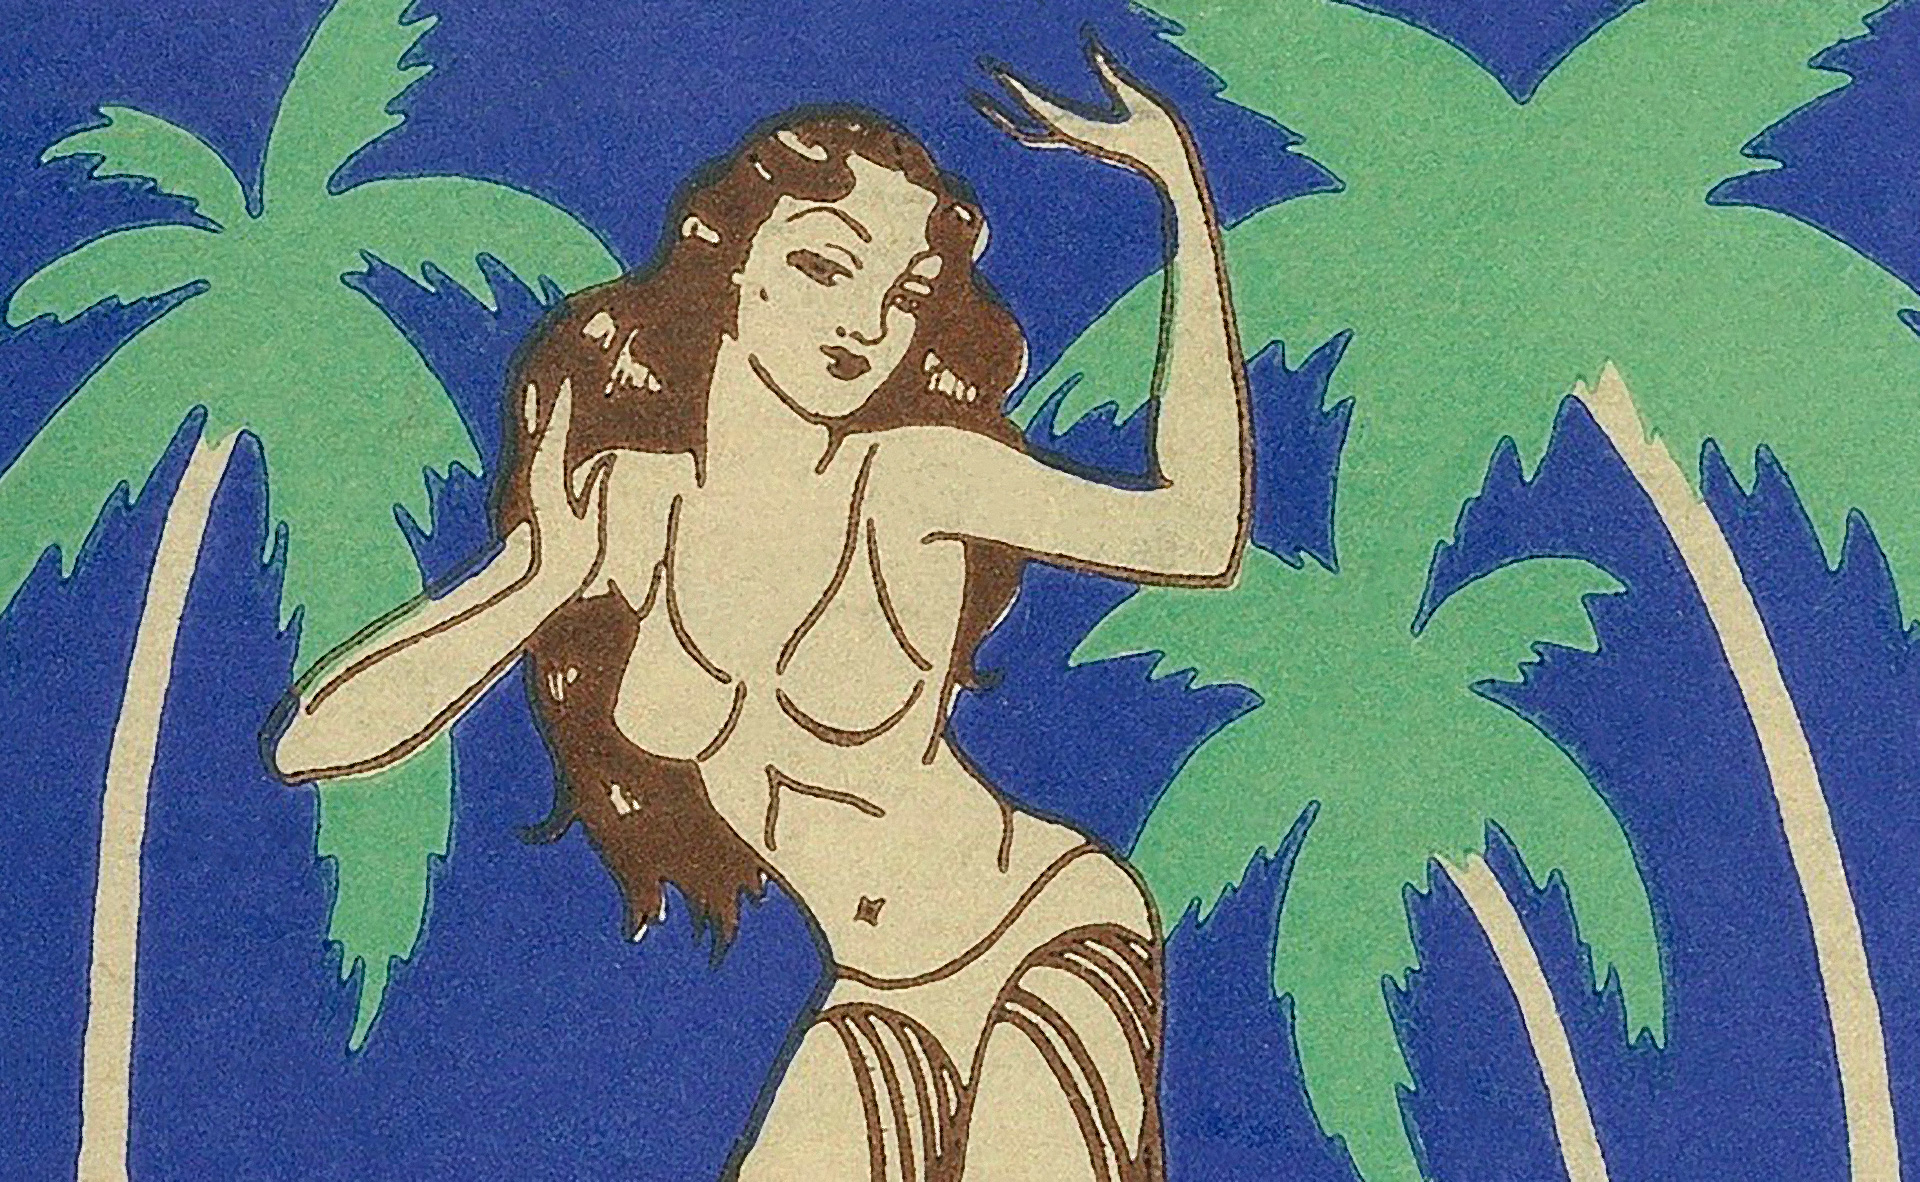 The Tropic Cafe hula girl, c1939